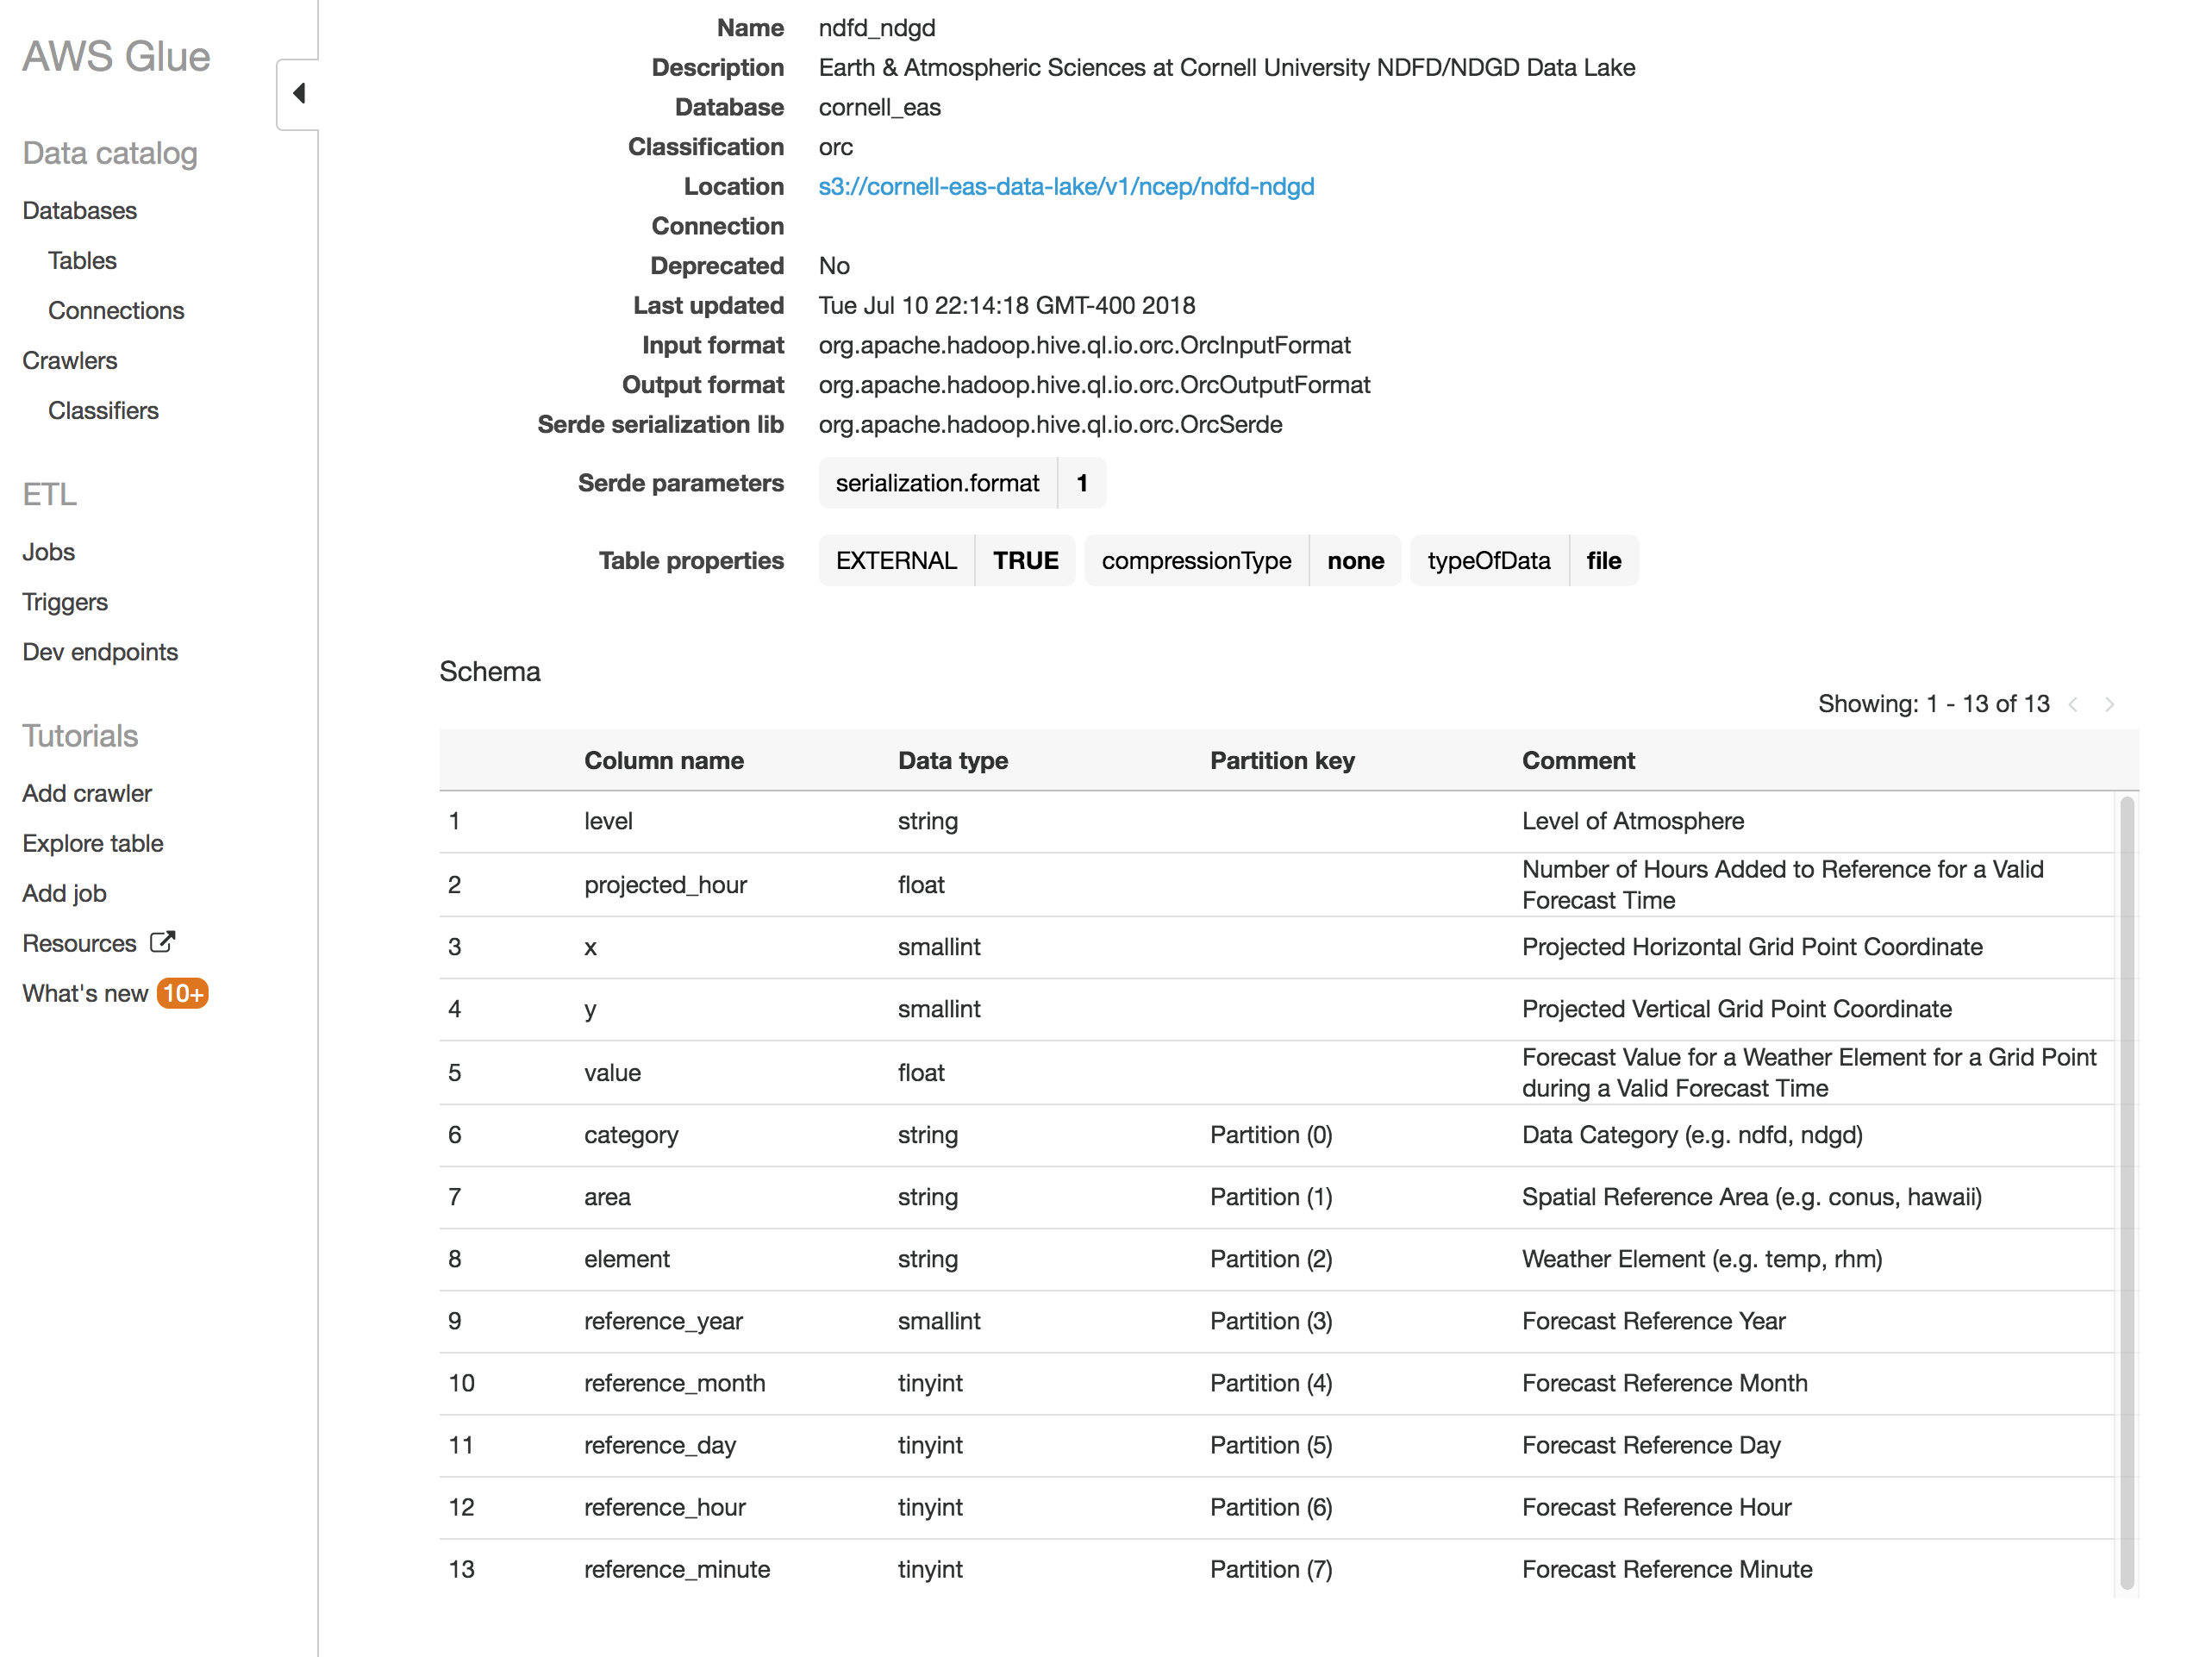 AWS Glue Catalog Listing for cornell_eas.ndfd_ndgd Table